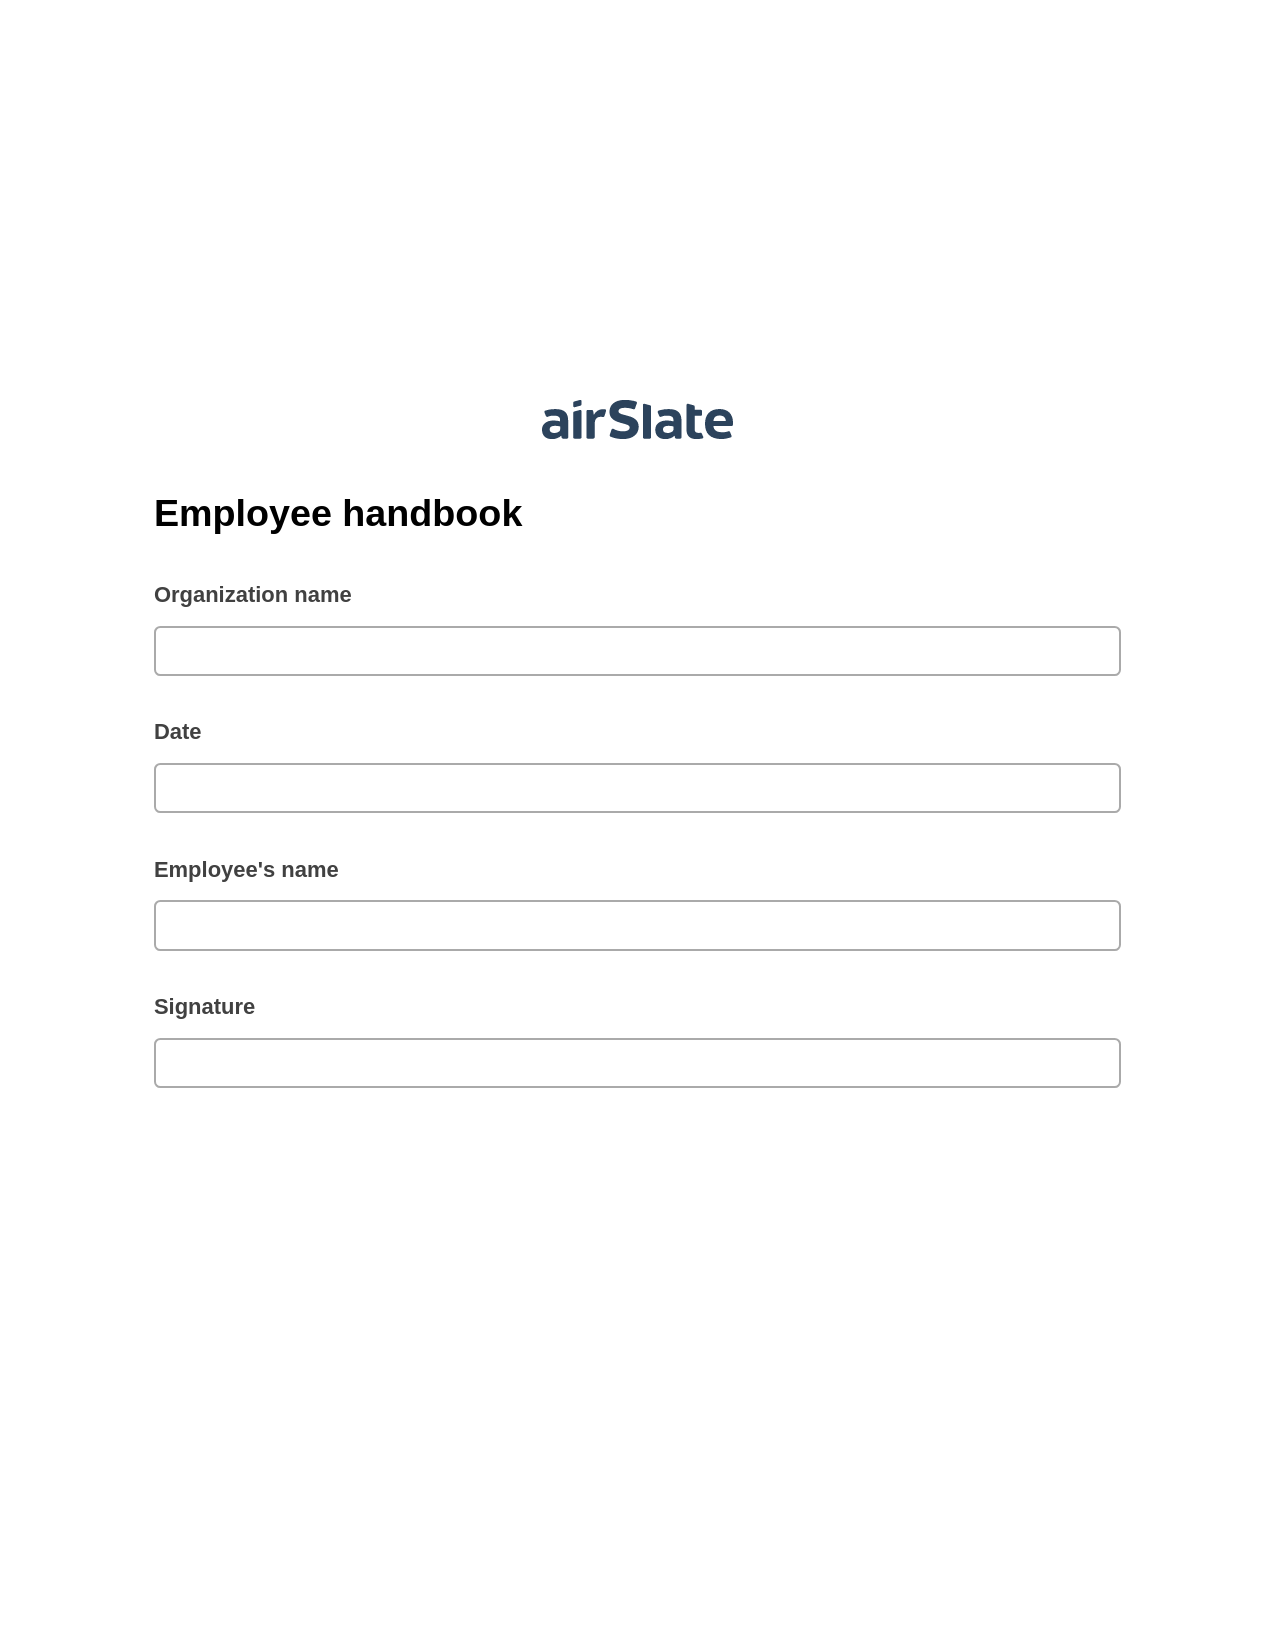 Employee handbook Pre-fill from CSV File Bot, Update NetSuite Records Bot, Export to Google Sheet Bot